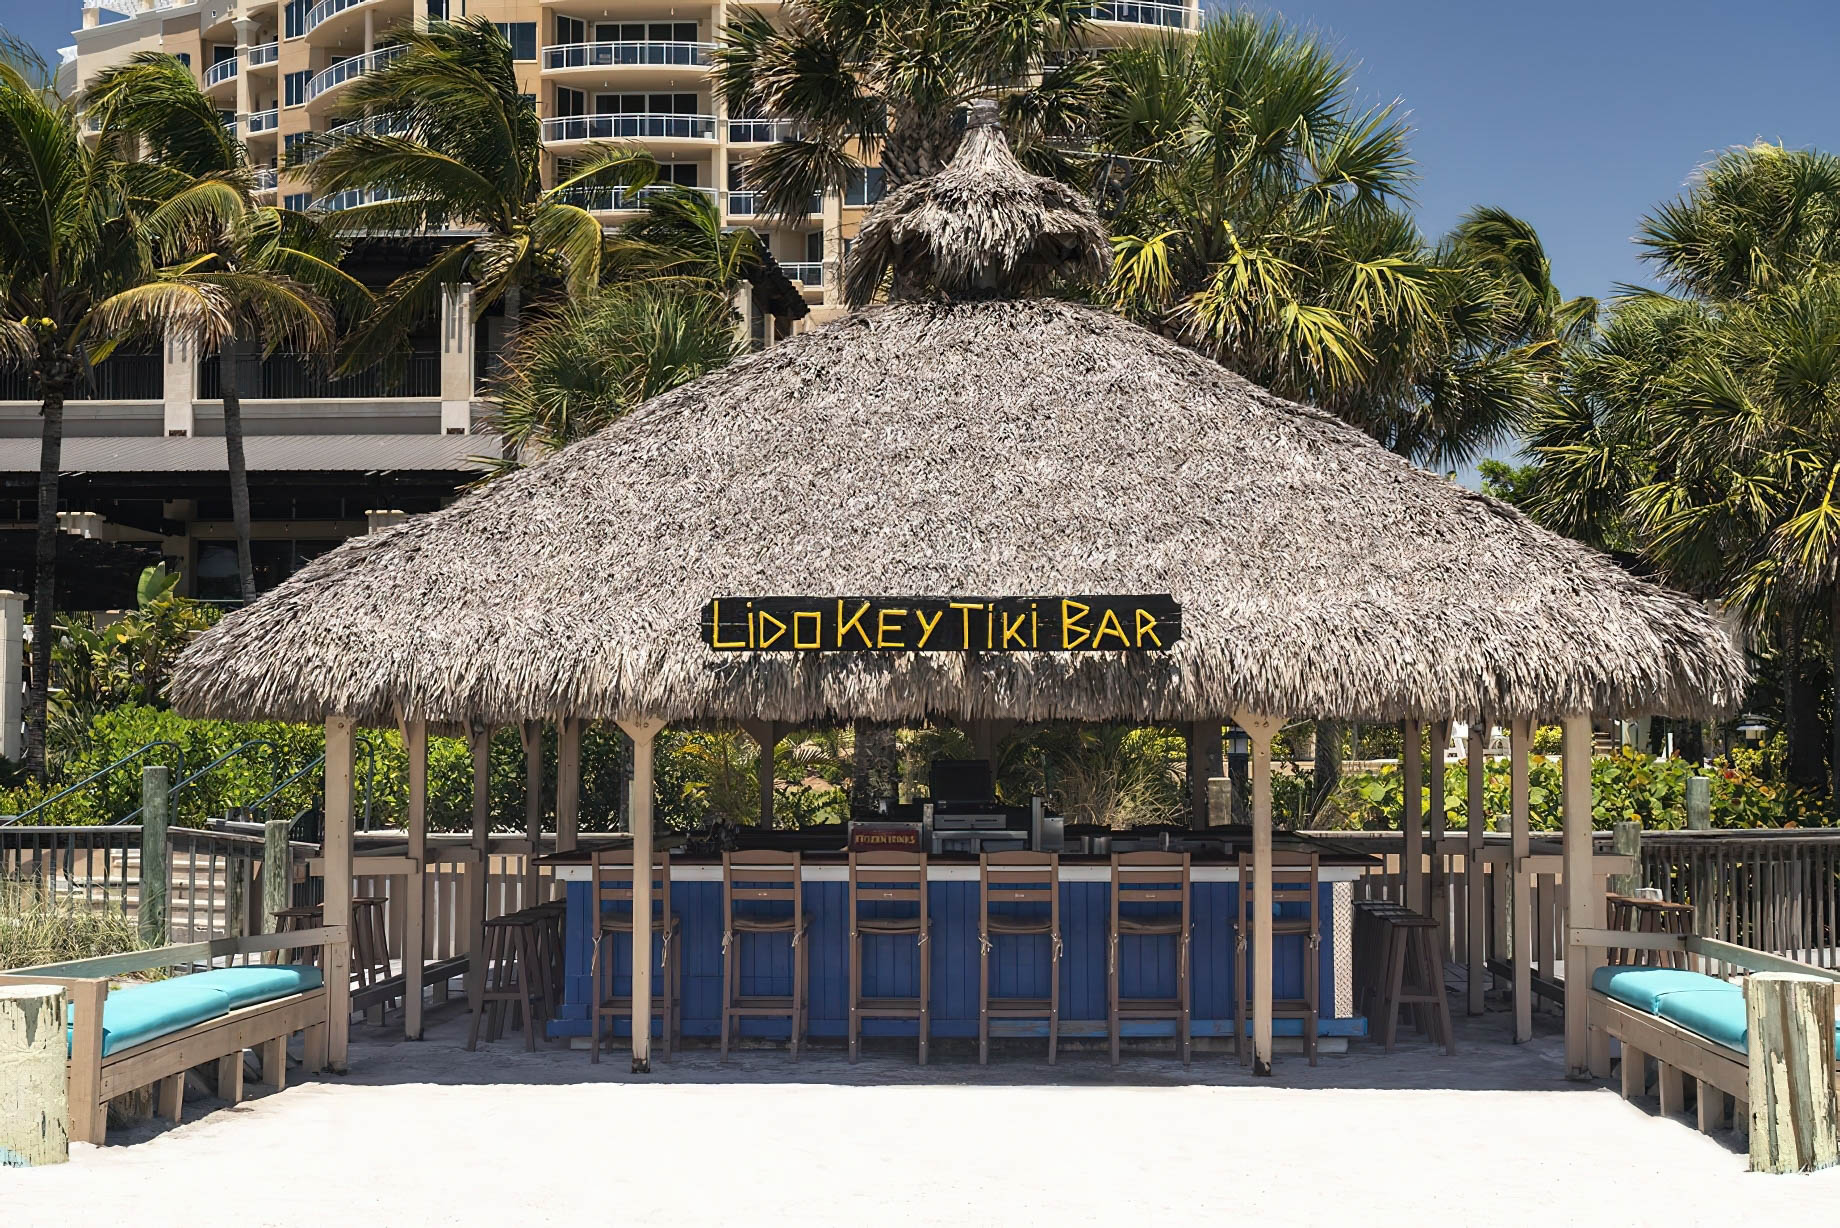 The Ritz-Carlton Beach Club Resort – Lido Key, Sarasota, FL, USA – The Lido Key Tiki Bar Front